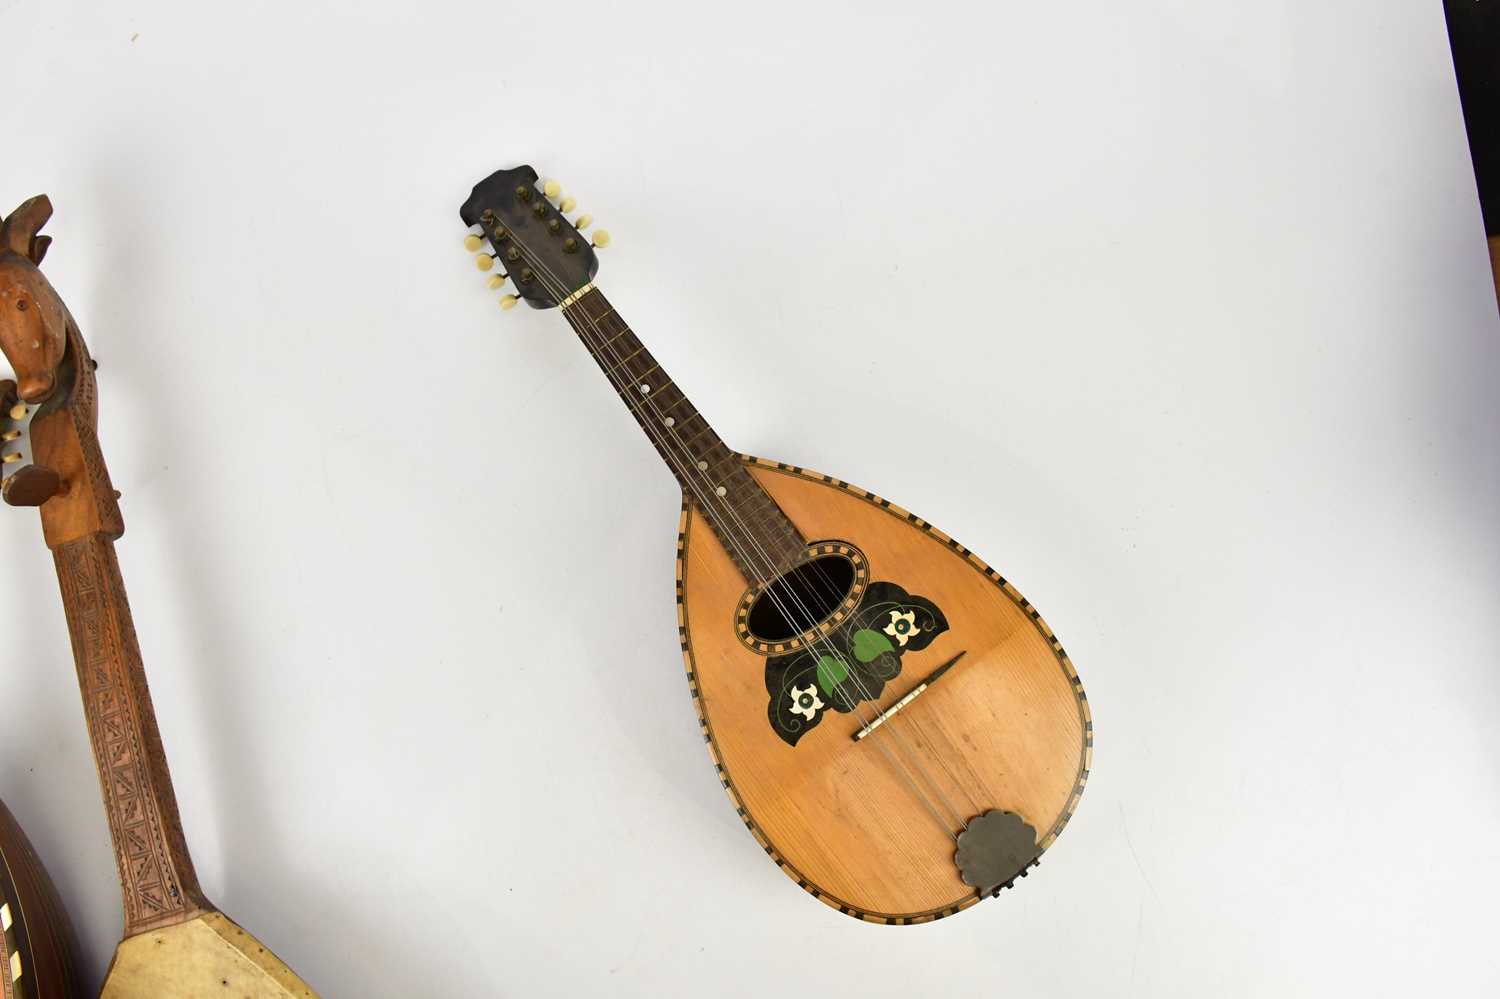 LUIGI POPPI, PALERMO; a bowl back mandolin, a flat back mandolin and an ethnic instrument (3). - Bild 2 aus 6